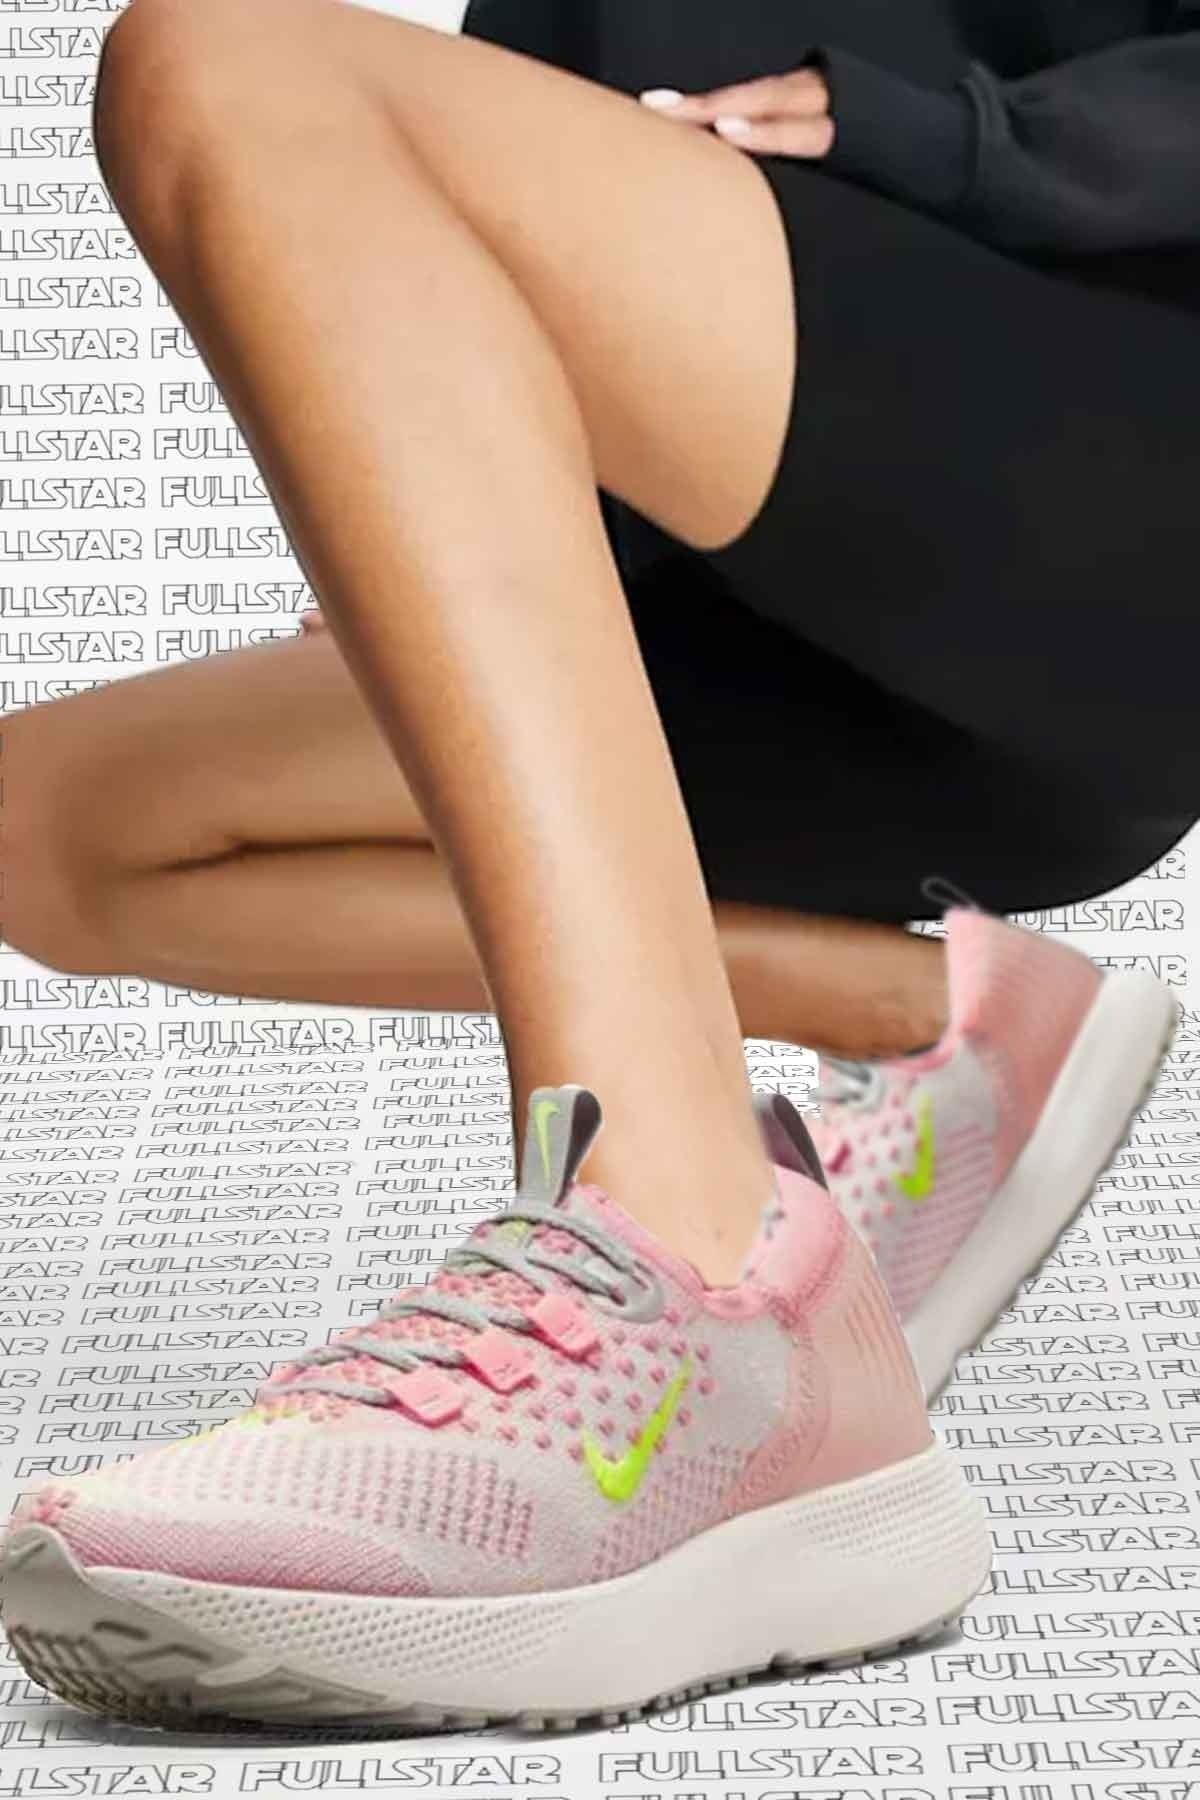 Nike React Escape Run Flyknit Walk Runnig Shoes Yürüyüş Koşu Ayakkabısı Pembe Pudra